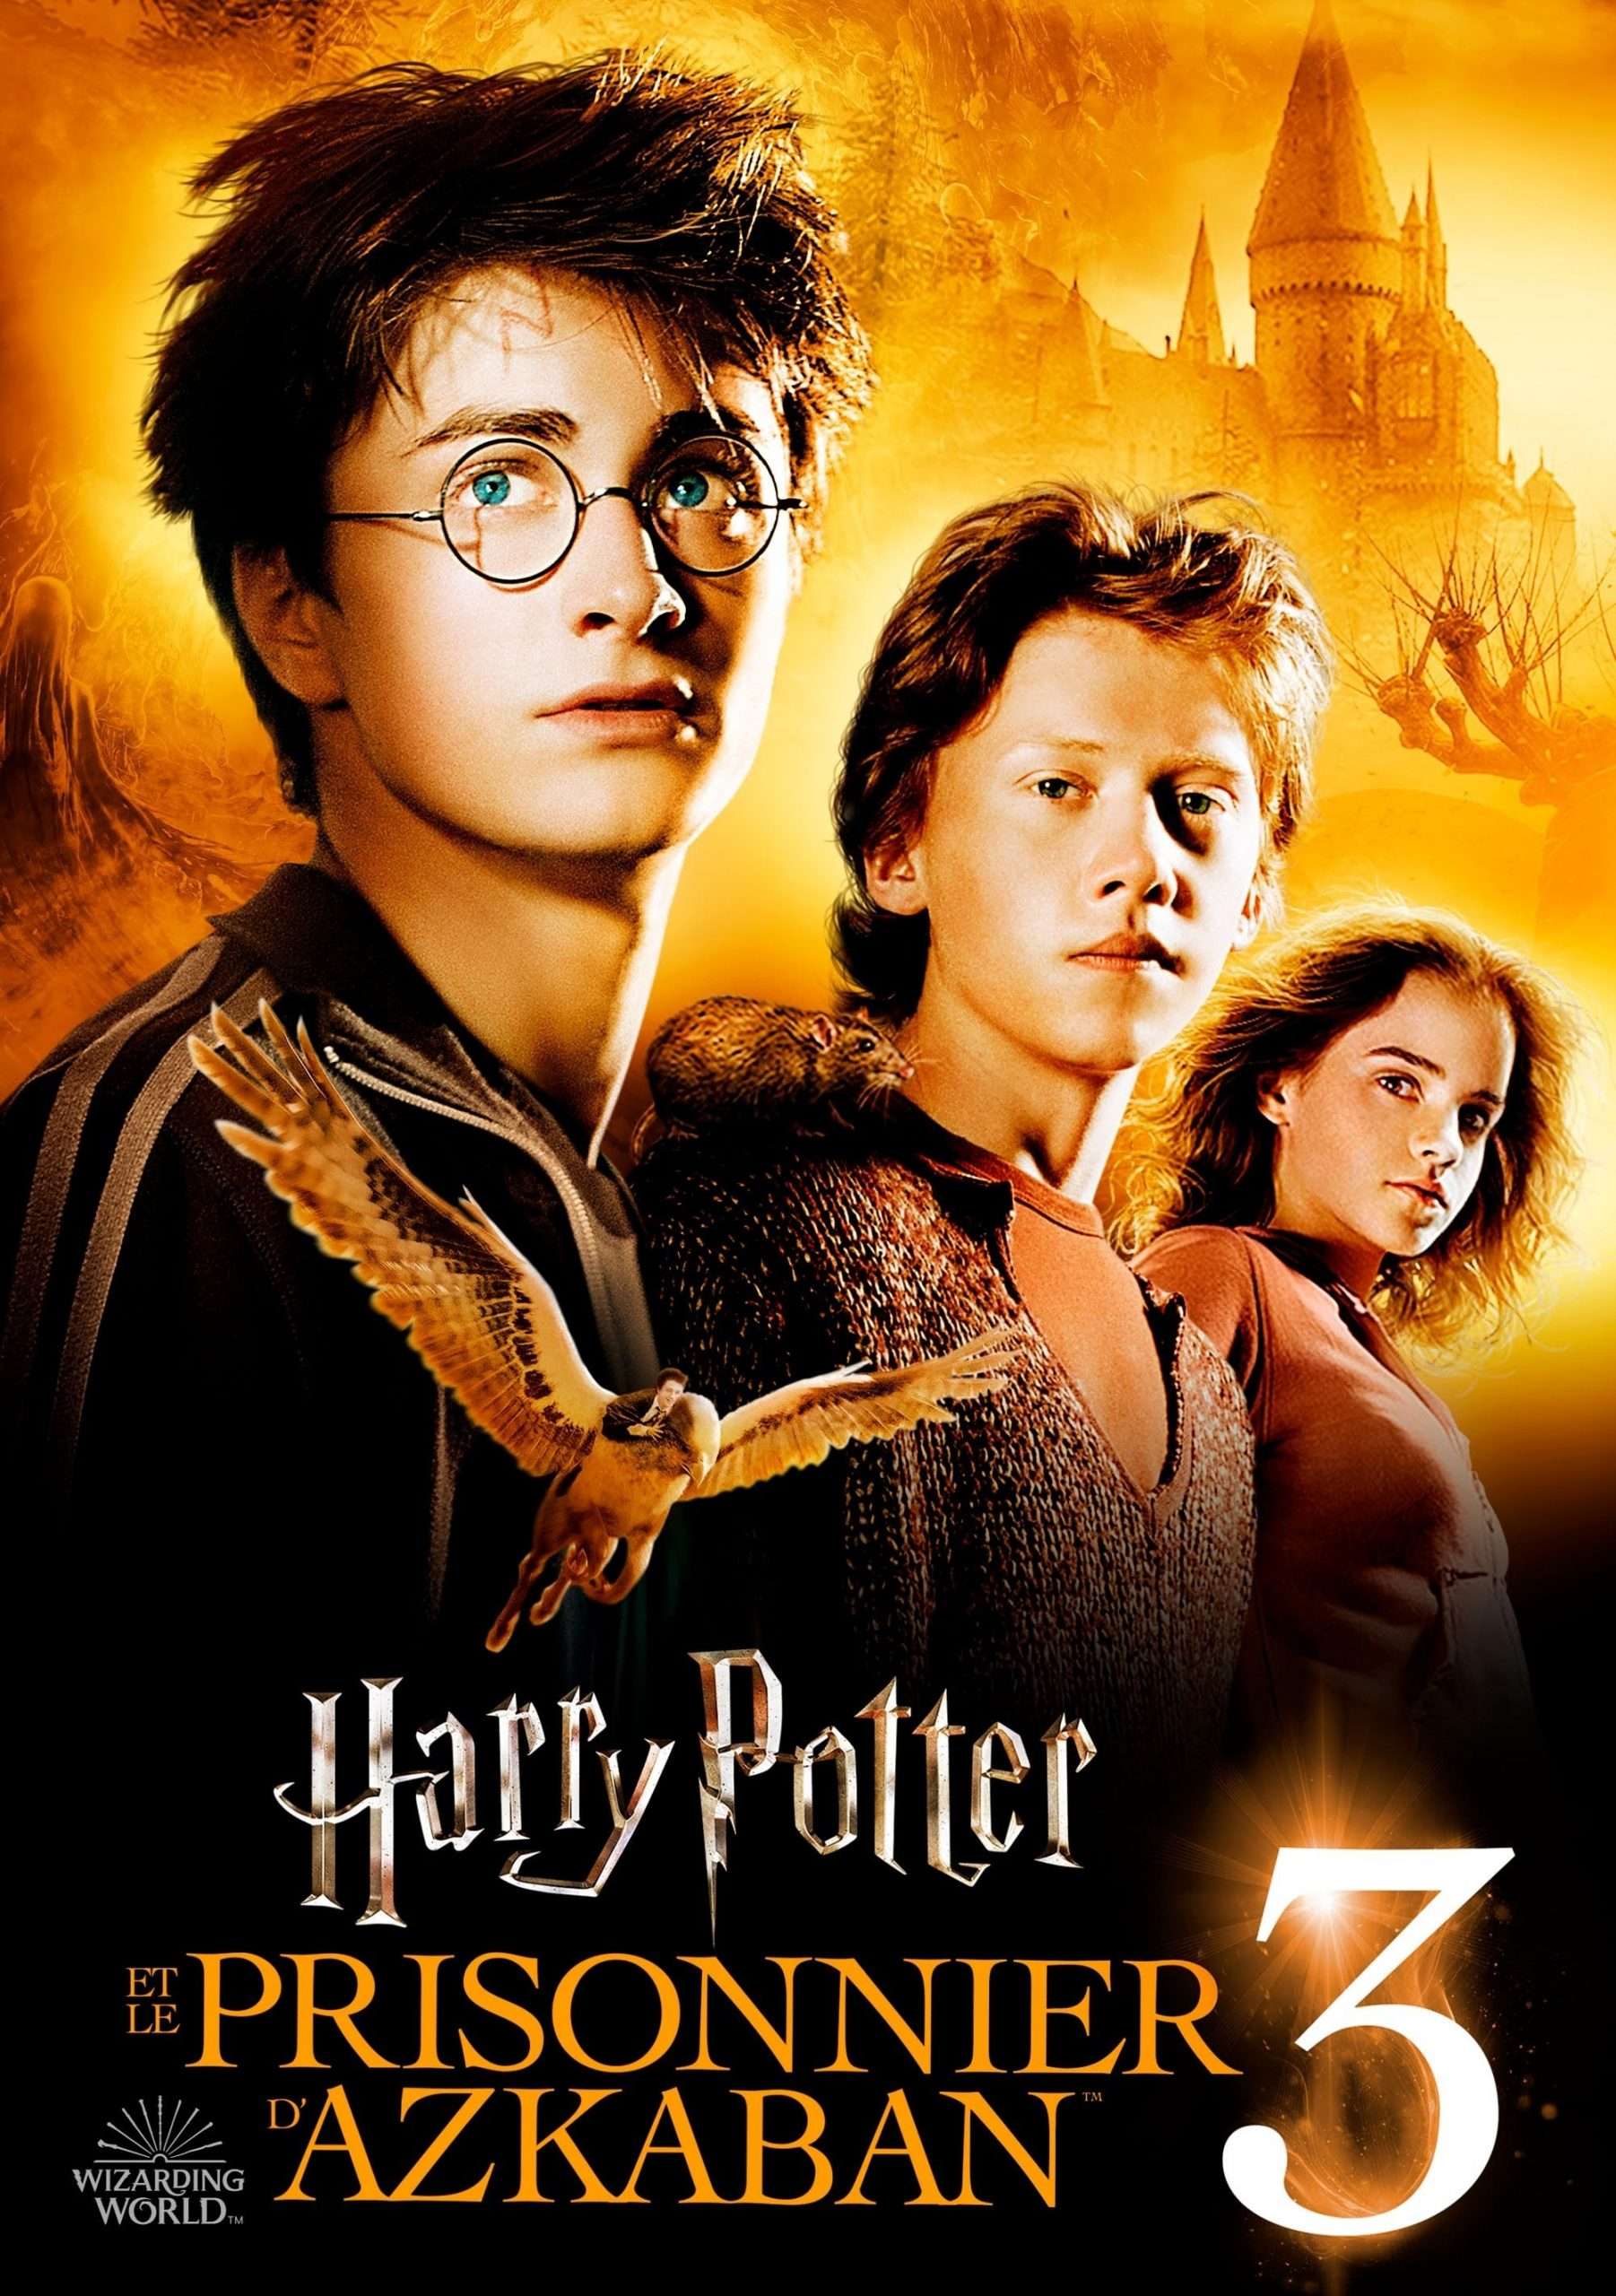 Watch Harry Potter and the Prisoner of Azkaban (2004) Full Movie Online ...